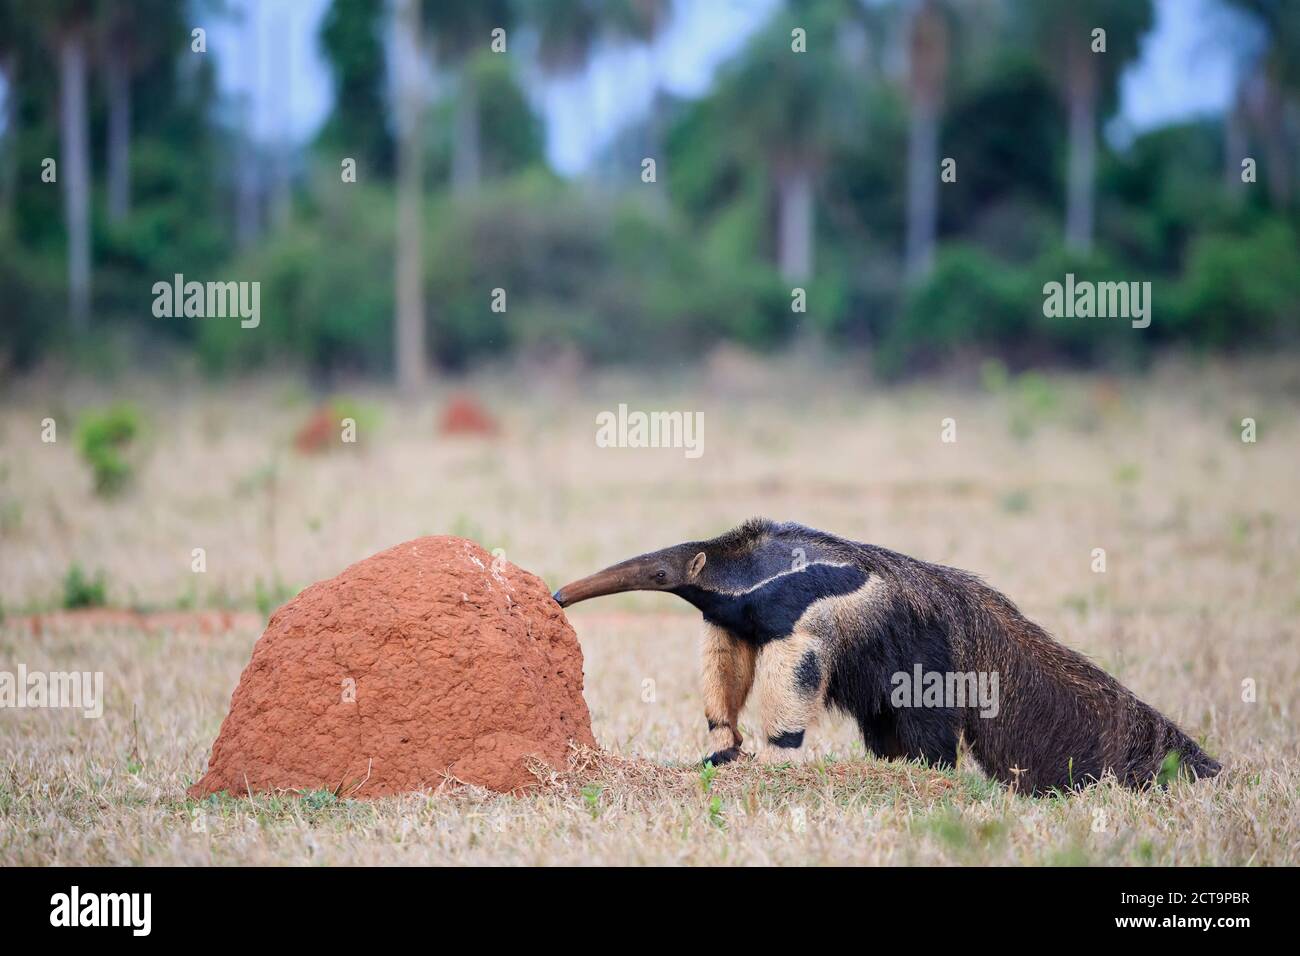 Brazil, Mato Grosso, Mato Grosso do Sul, Pantanal, giant anteater and termite hill Stock Photo